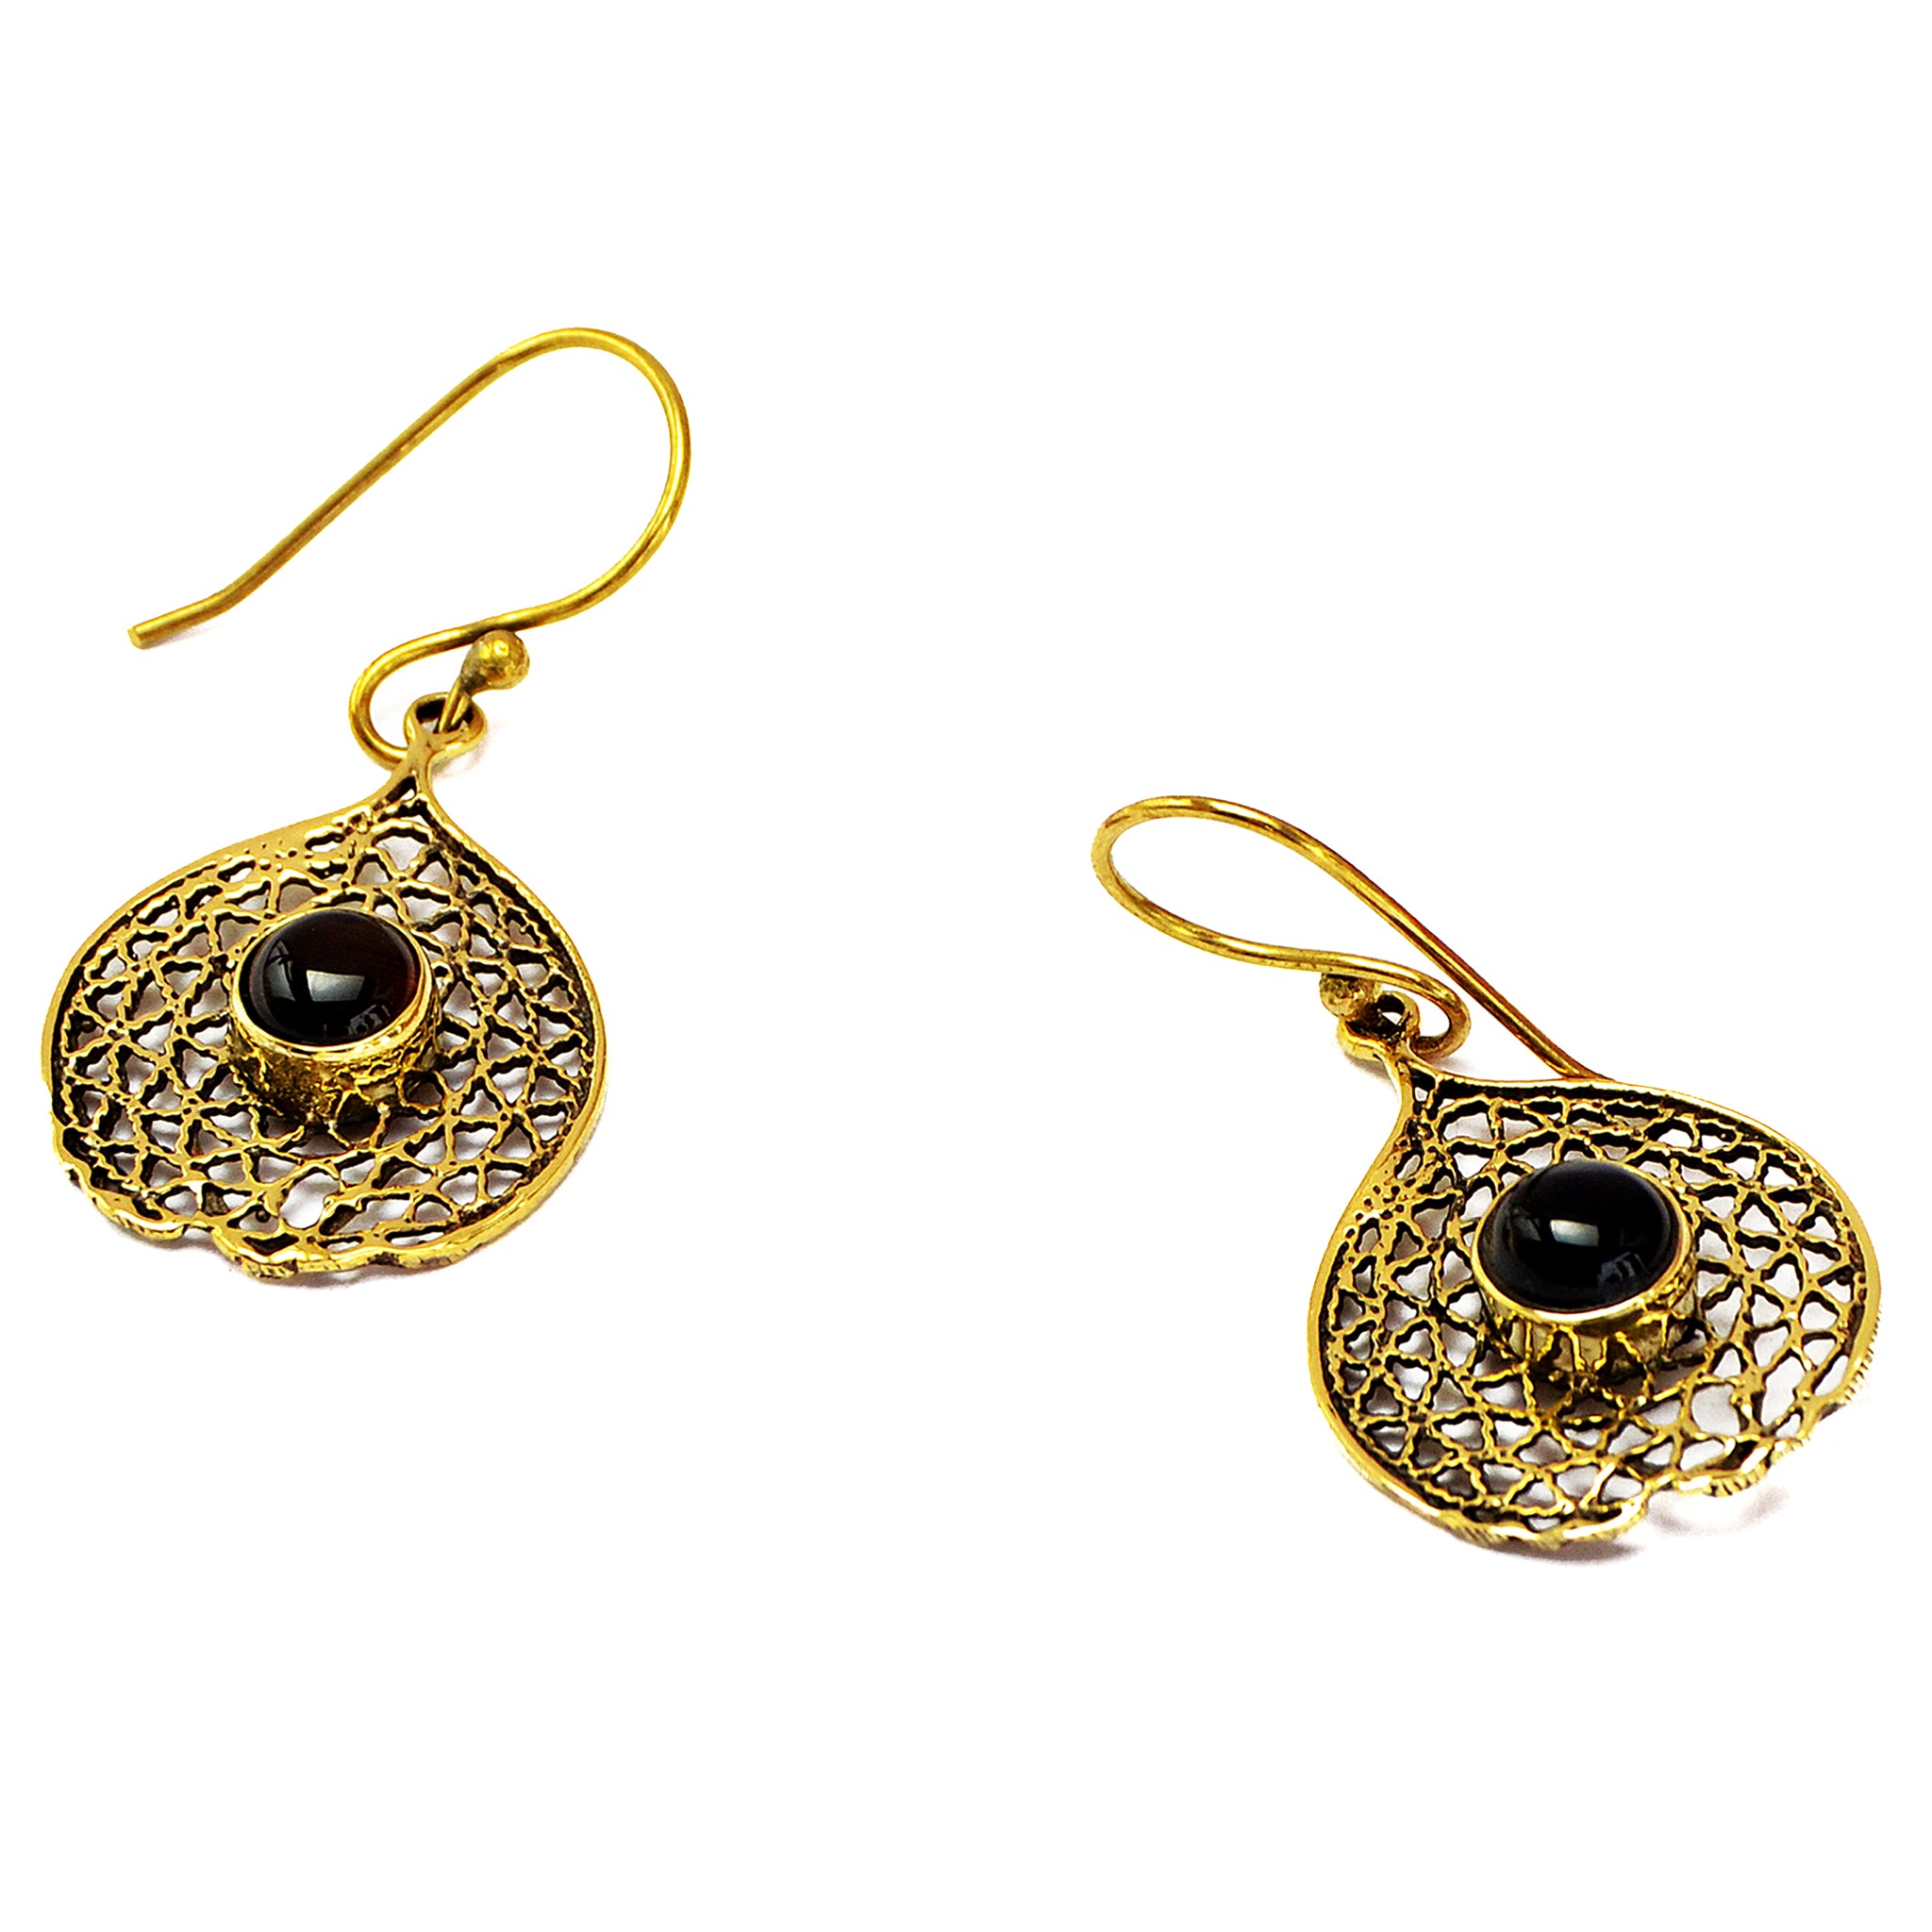 Indian earrings gold